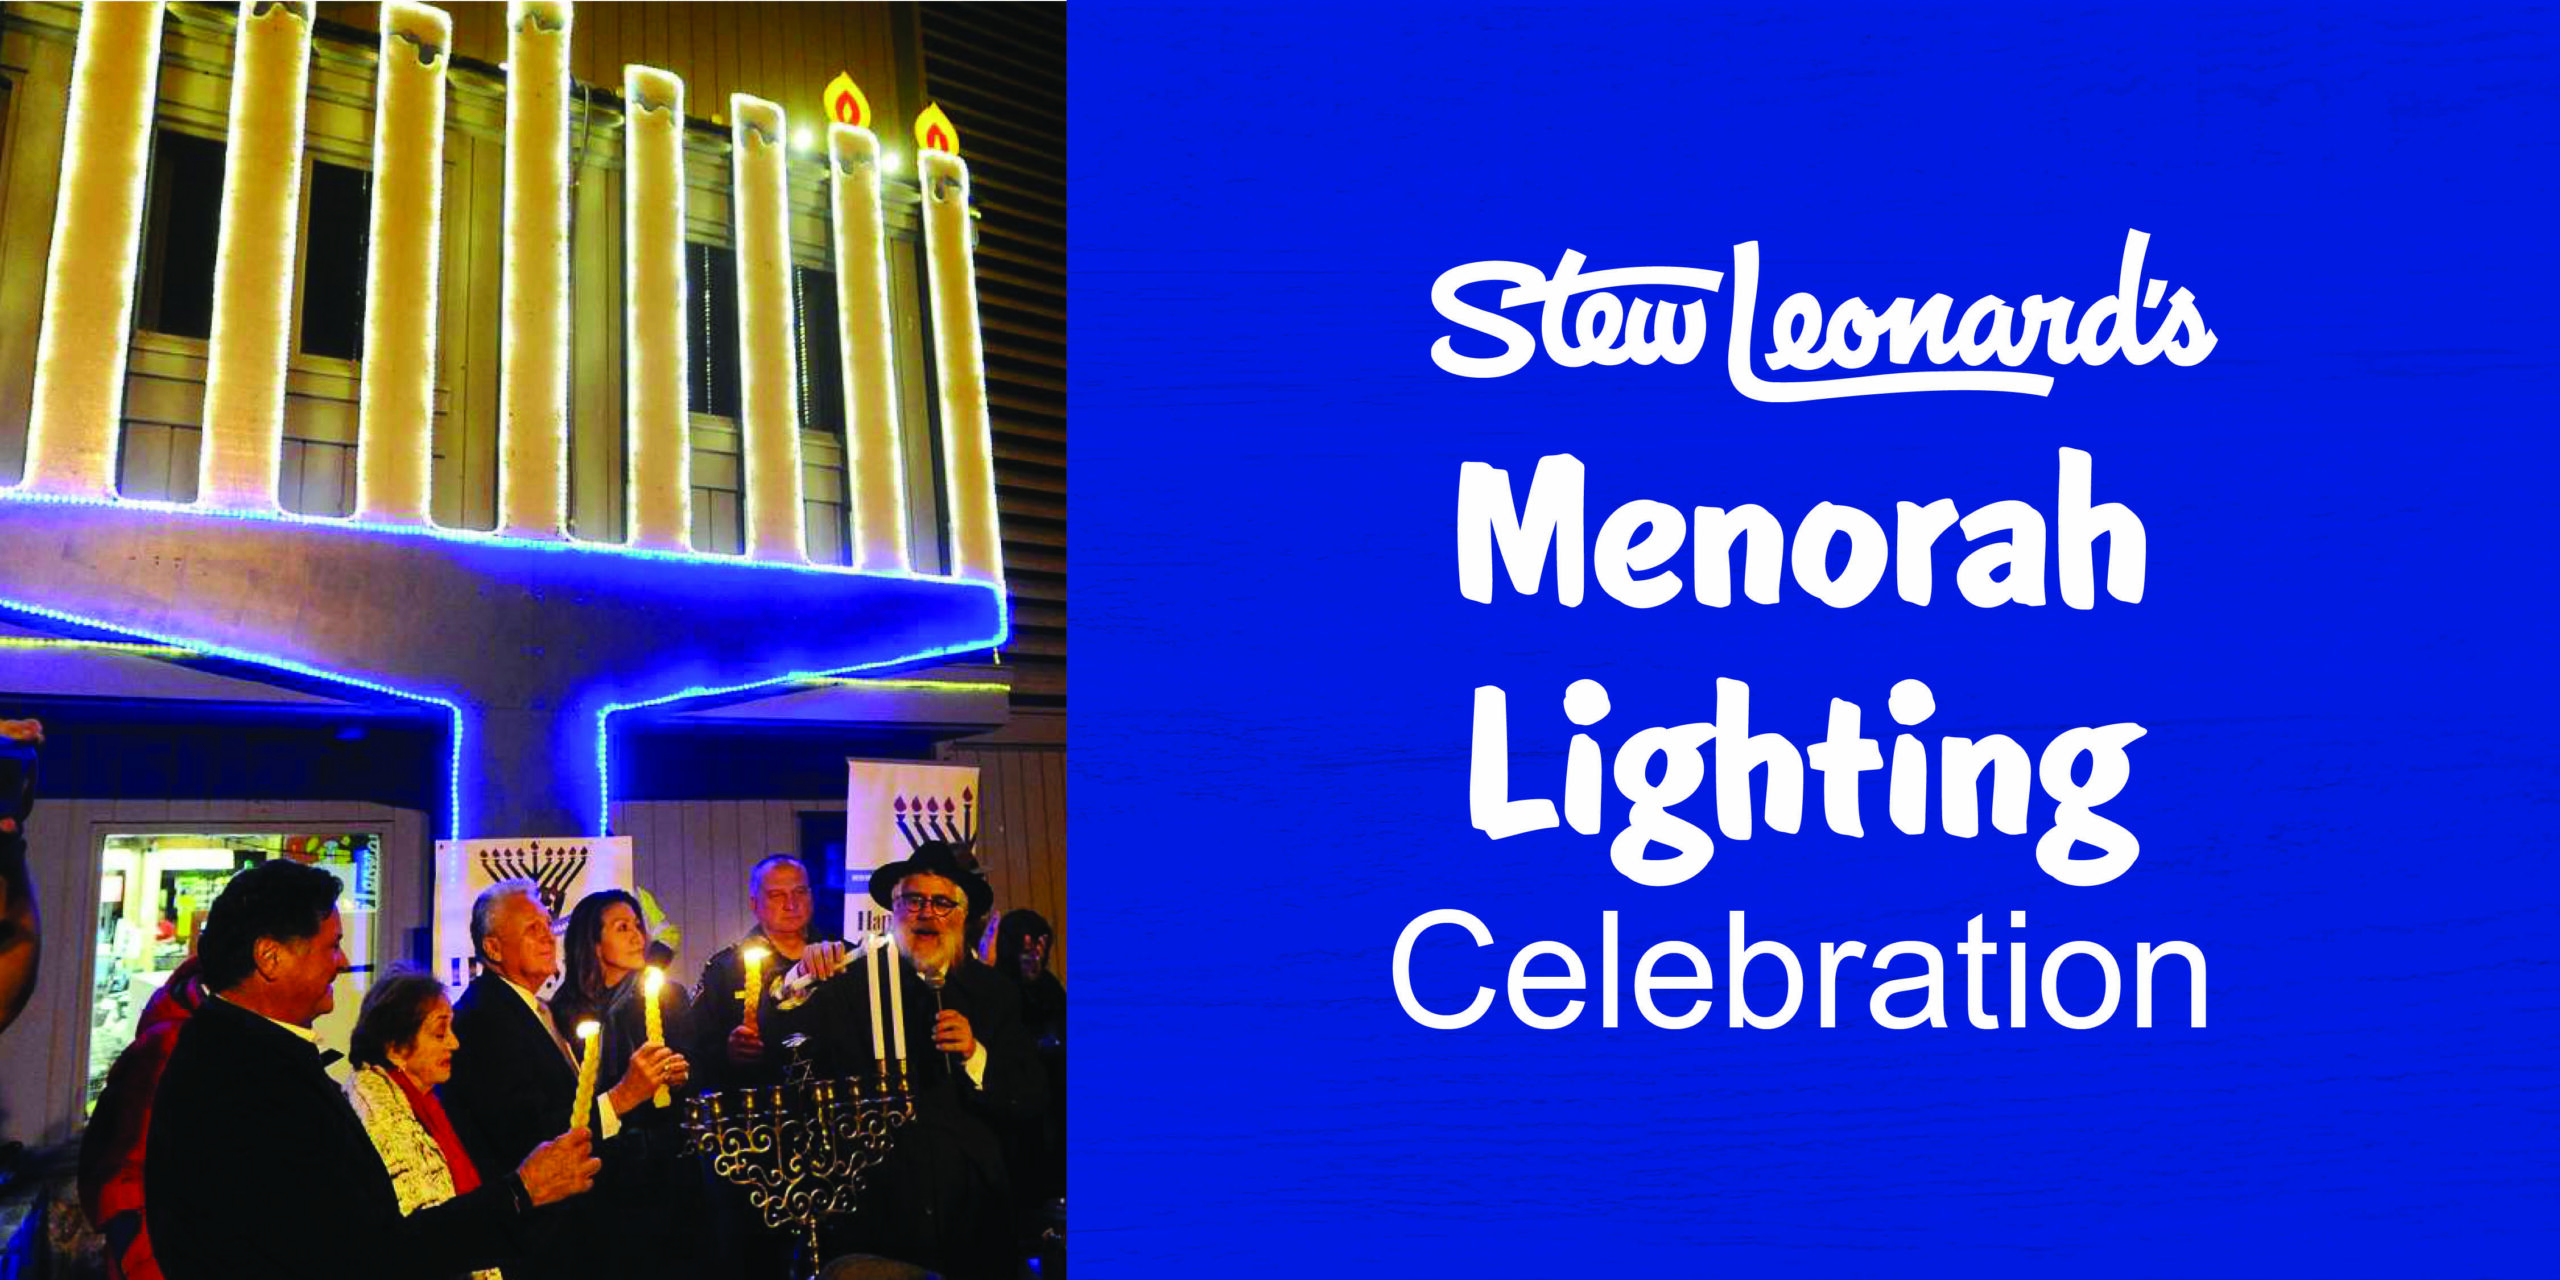 Menorah Lighting Celebration